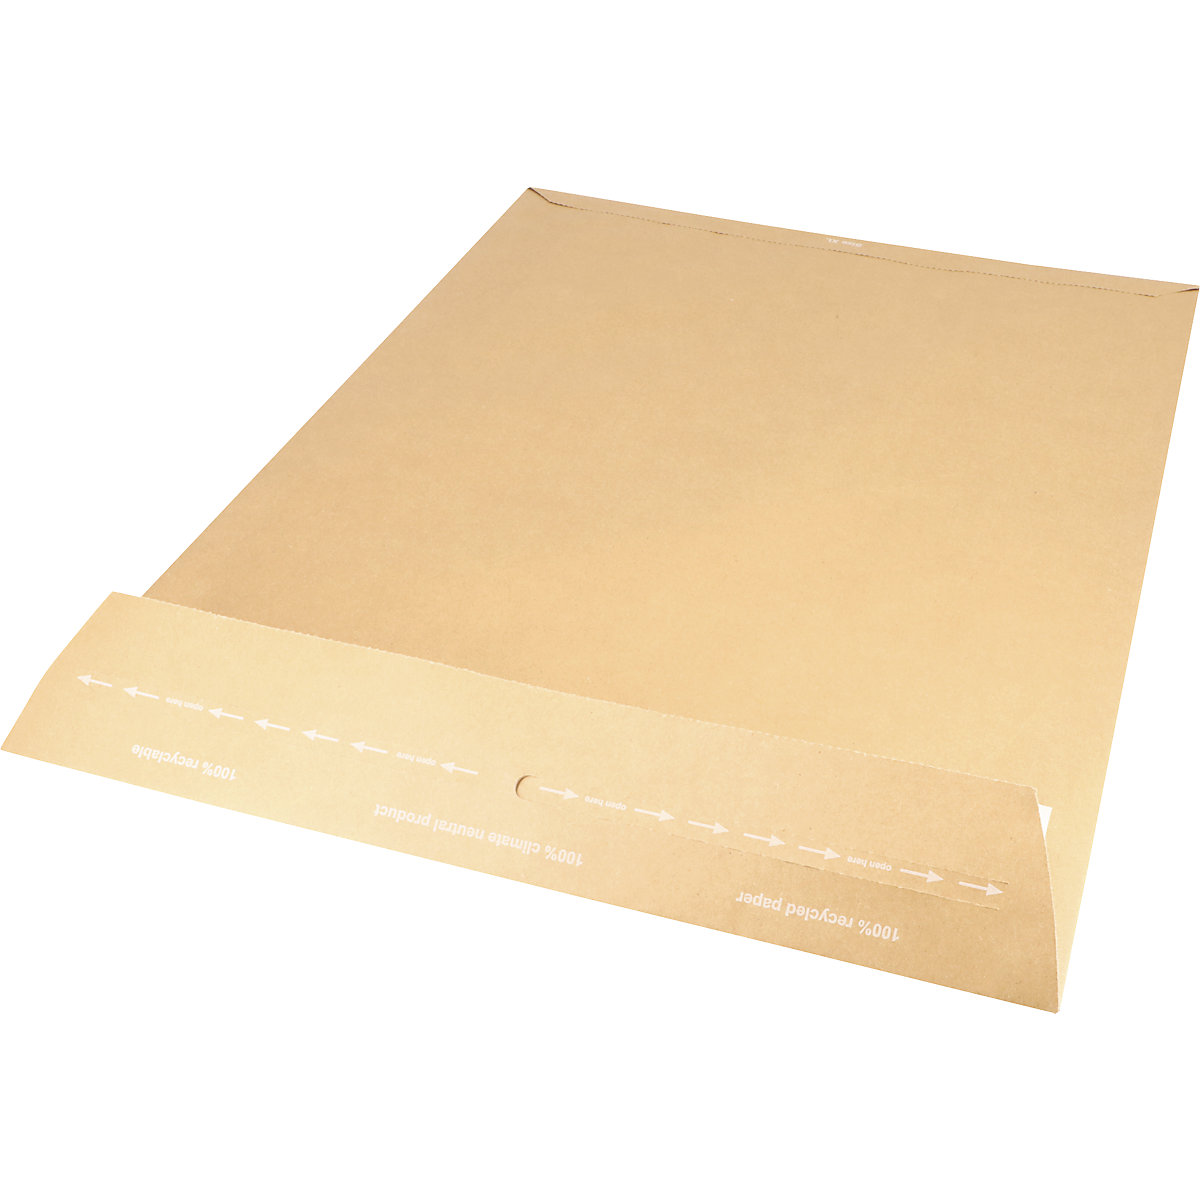 Versandtasche aus Papier E-Commerce terra, retourengeeignet, LxB 600 x 440 mm, VE 150 Stk, ab 5 VE-2